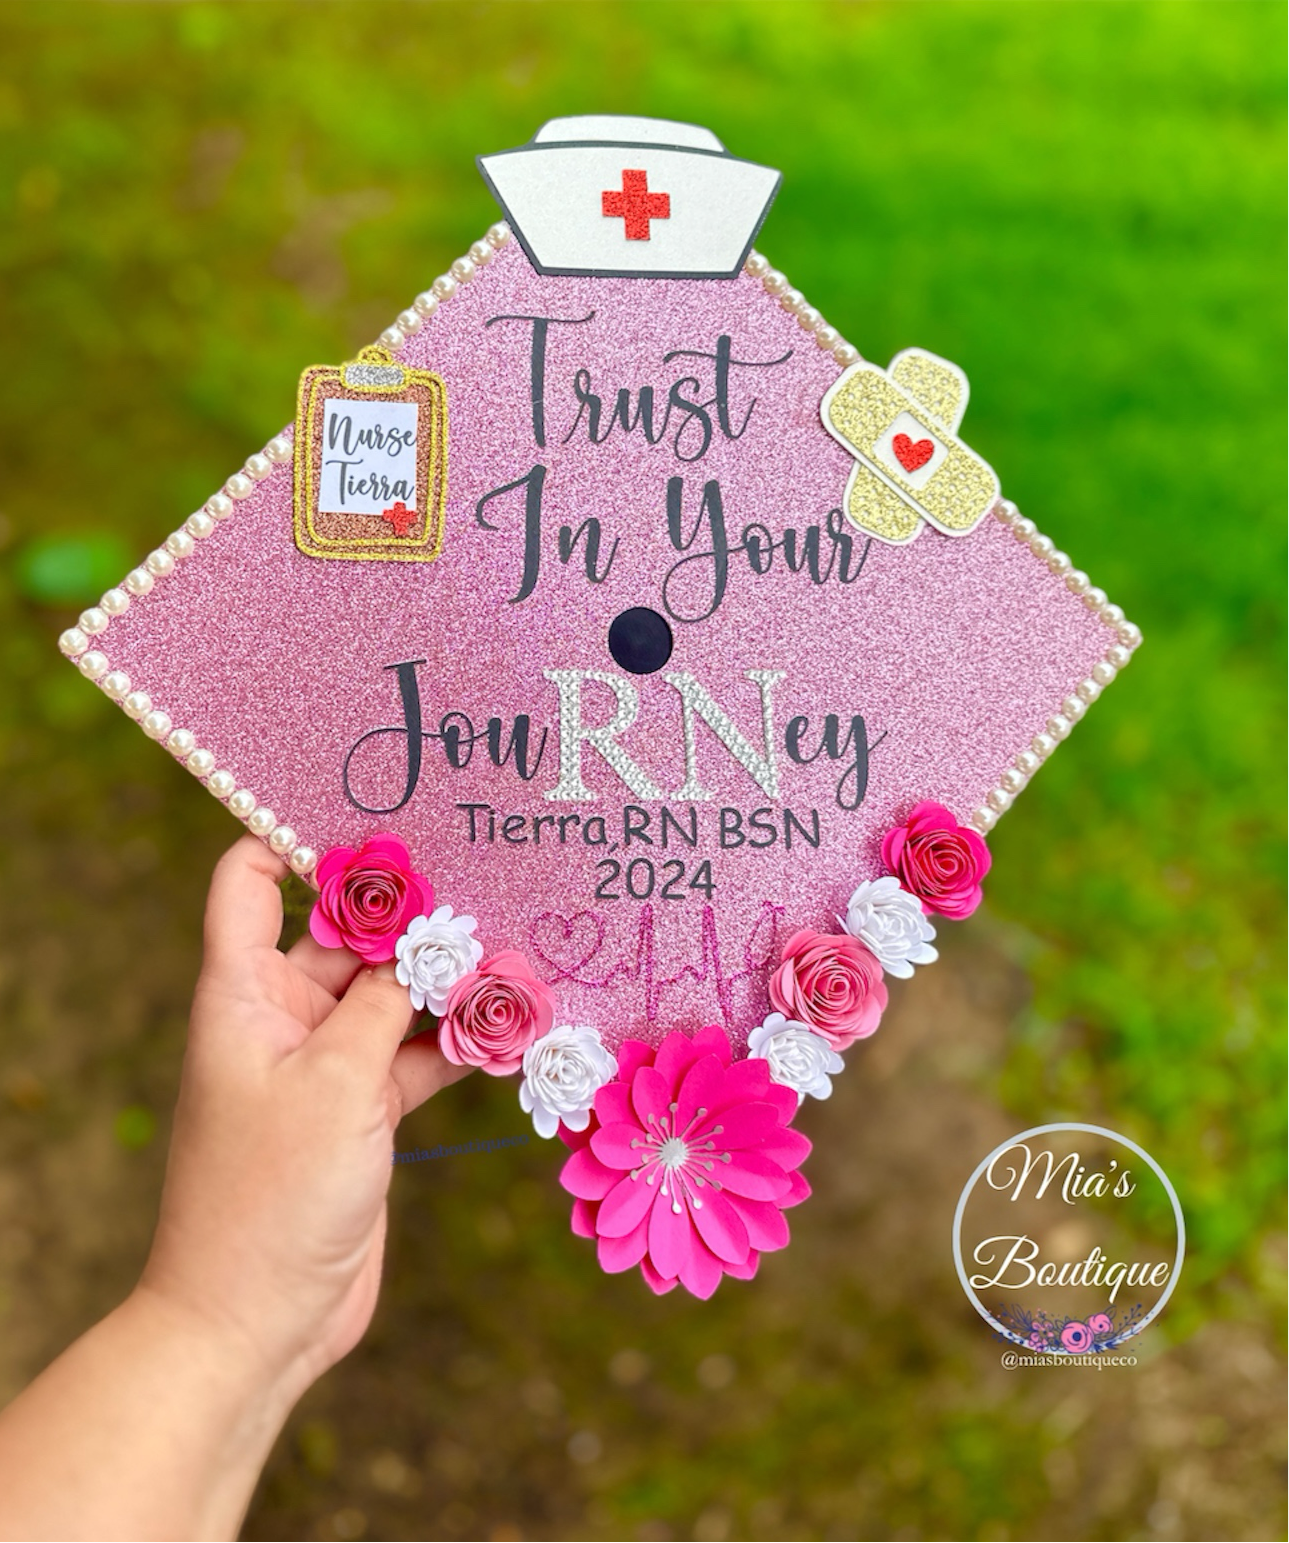 Custom Nurse RN Graduation Cap Topper Trust in Your Journey Grad Cap Gift Decoration Decor Glitter Pink Gold Rose RN